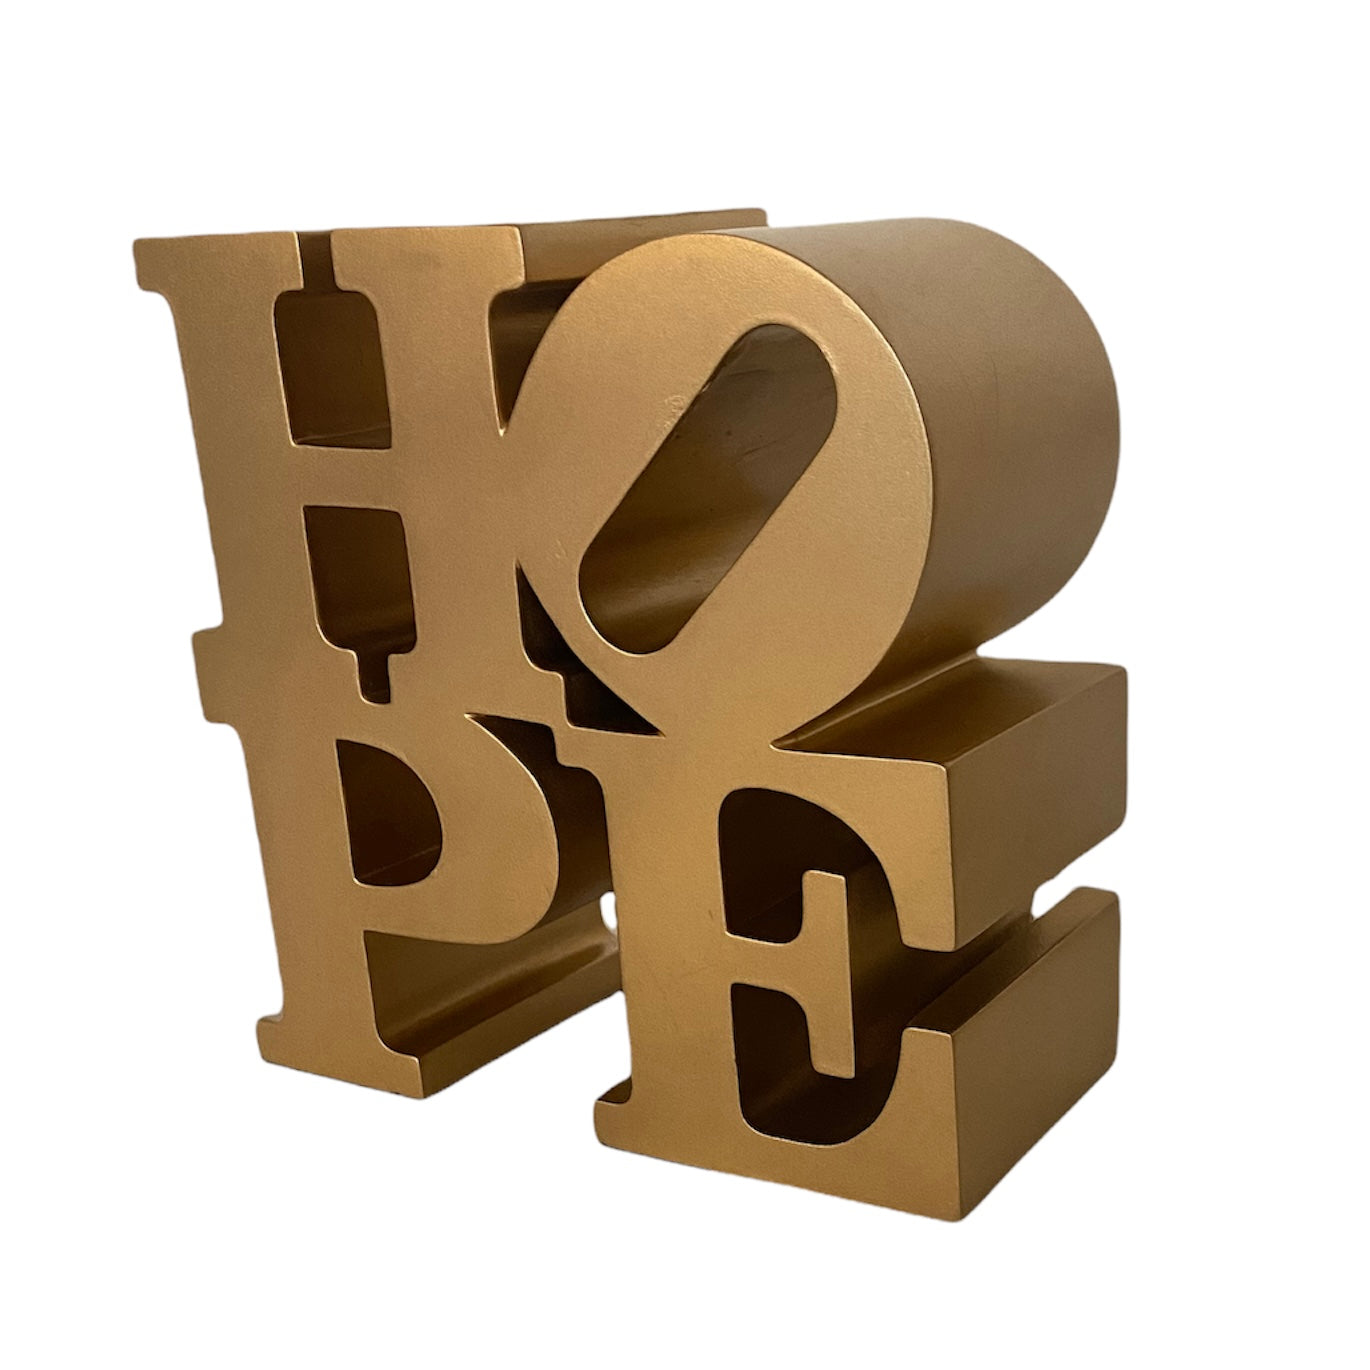 HOPE - Gold Editions Studio.